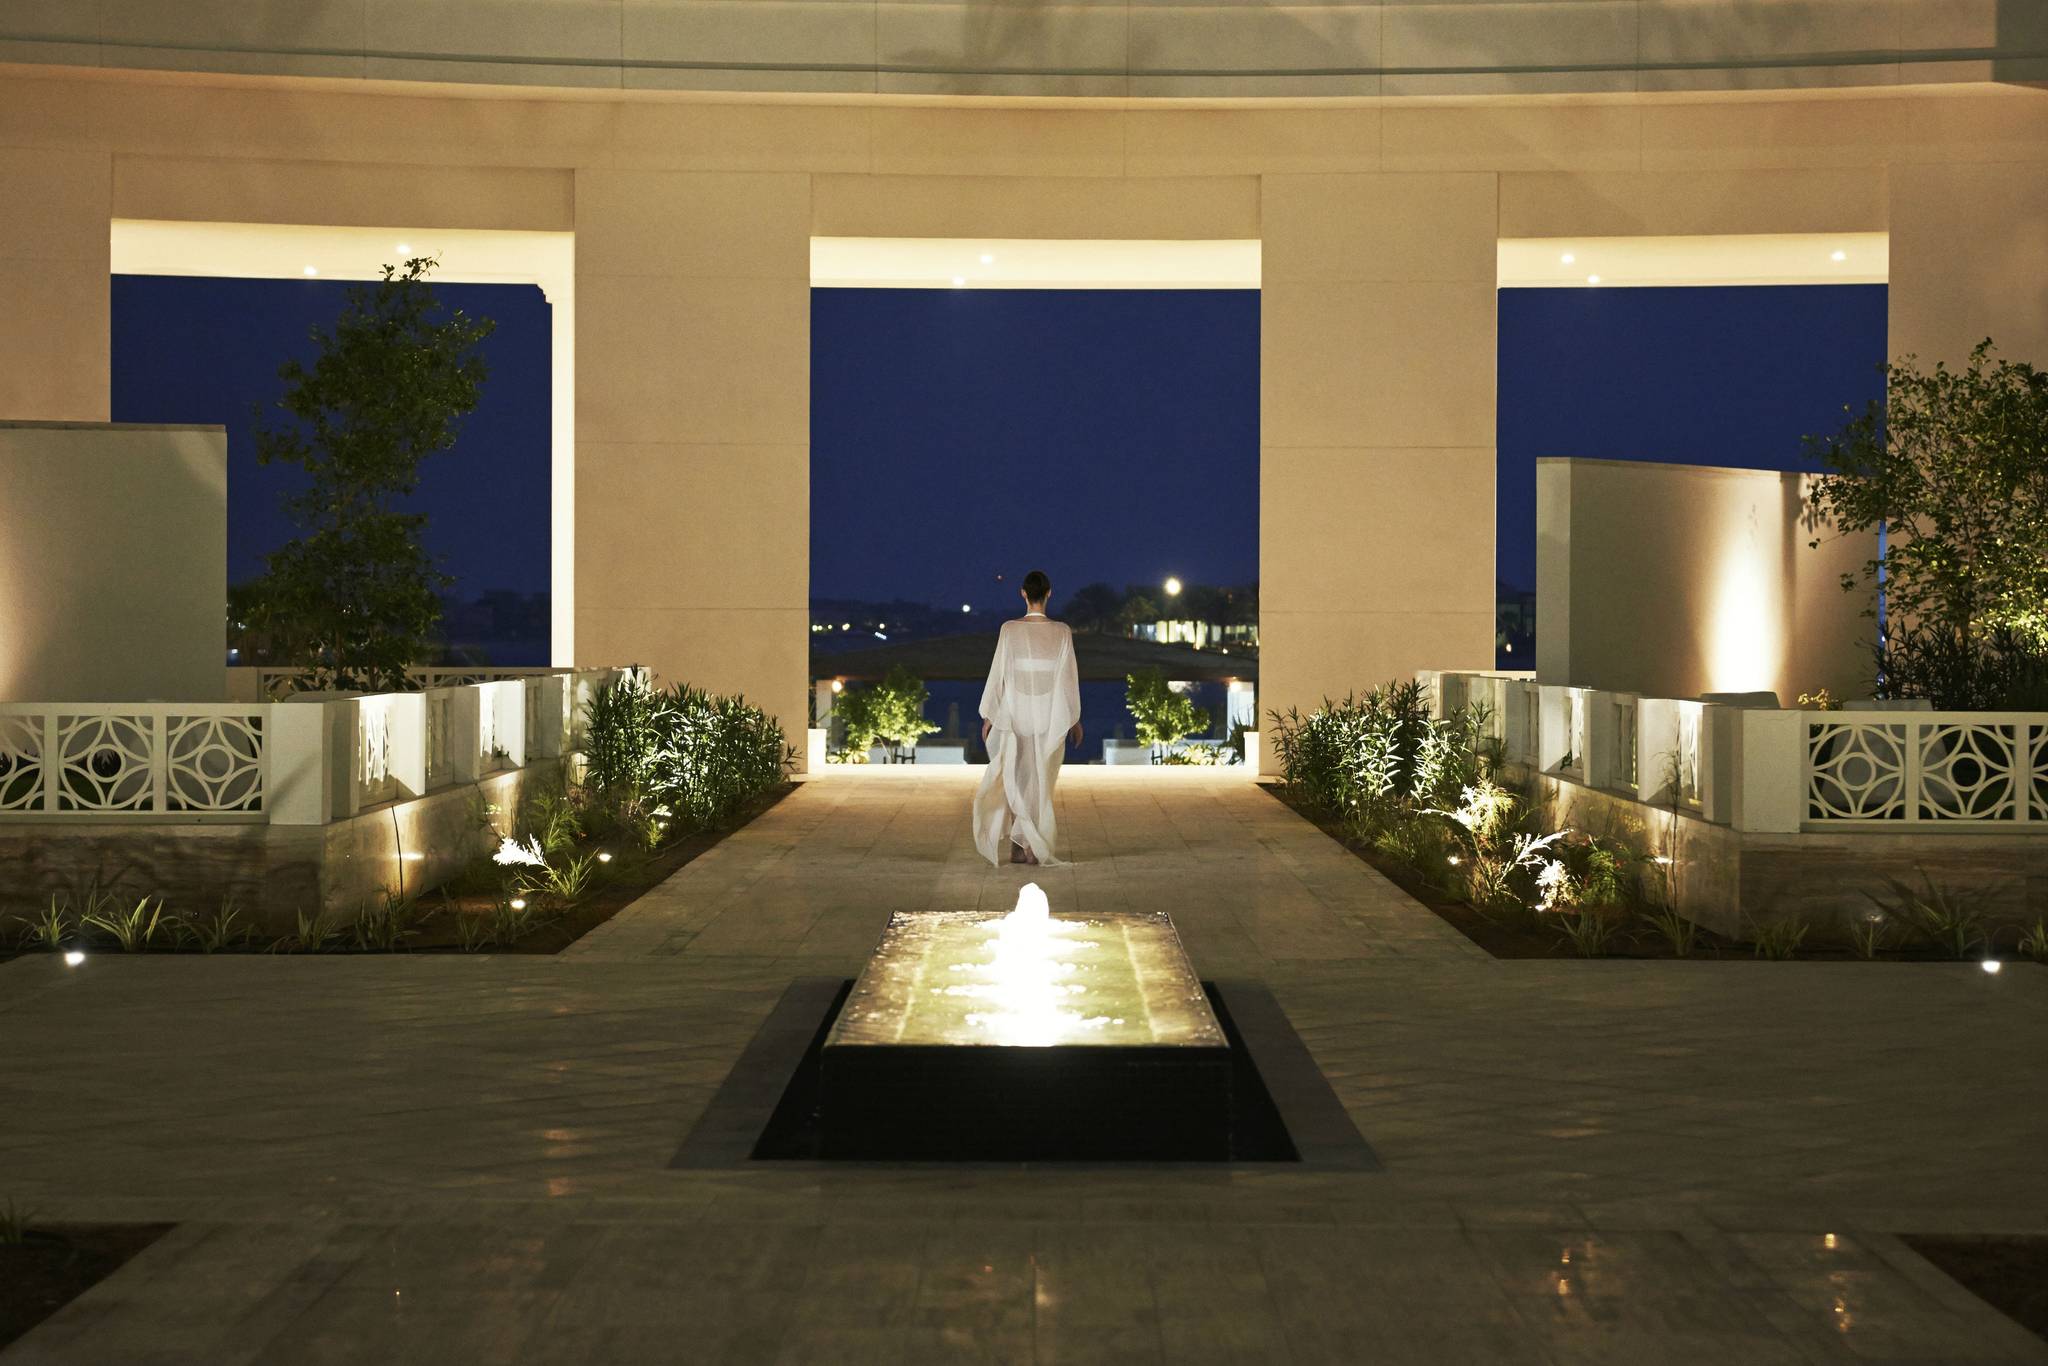 Waldorf Astoria offers exclusive luxury experiences